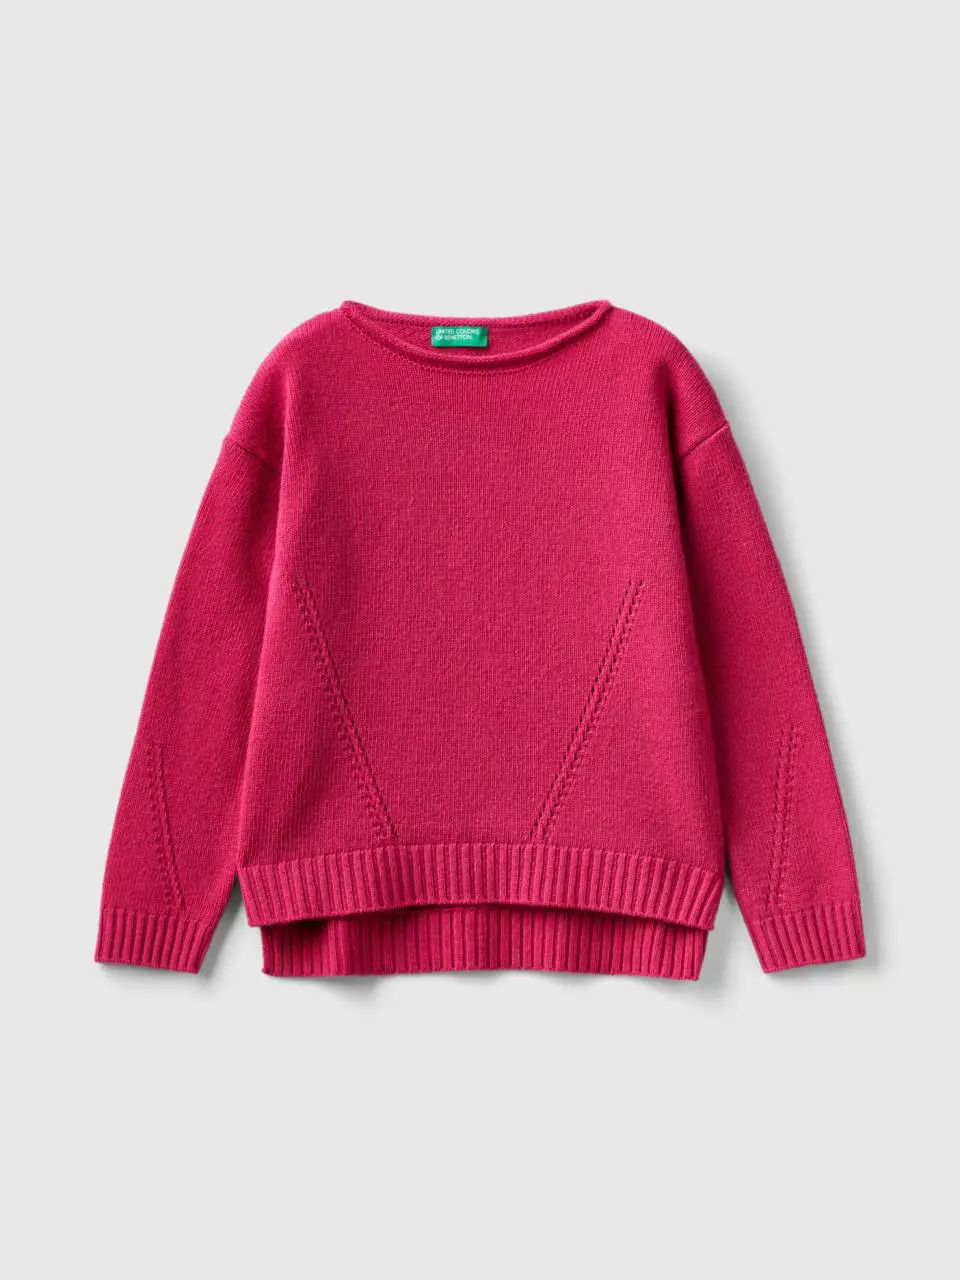 Benetton knit sweater with playful stitching. 1